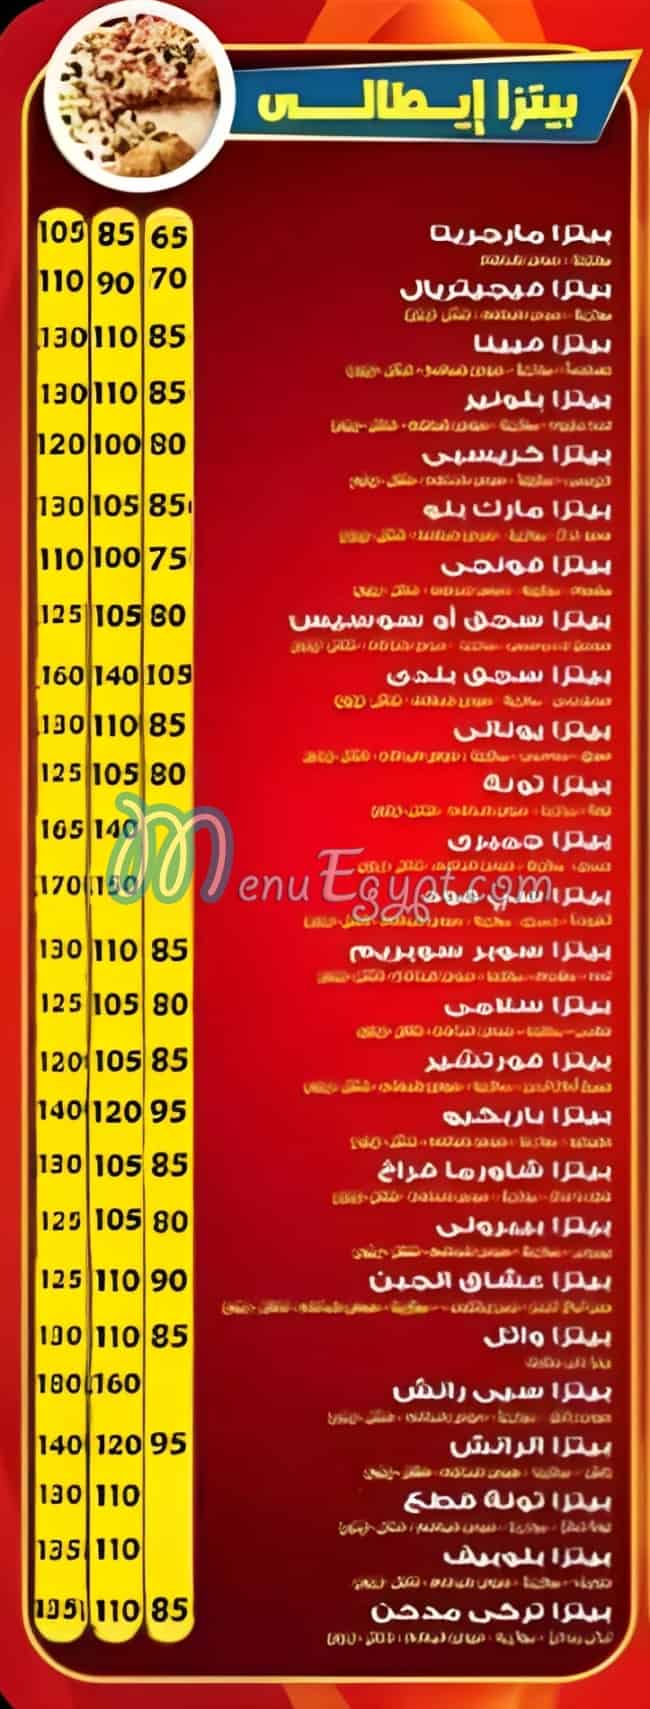 Fatatry Wael menu Egypt 1